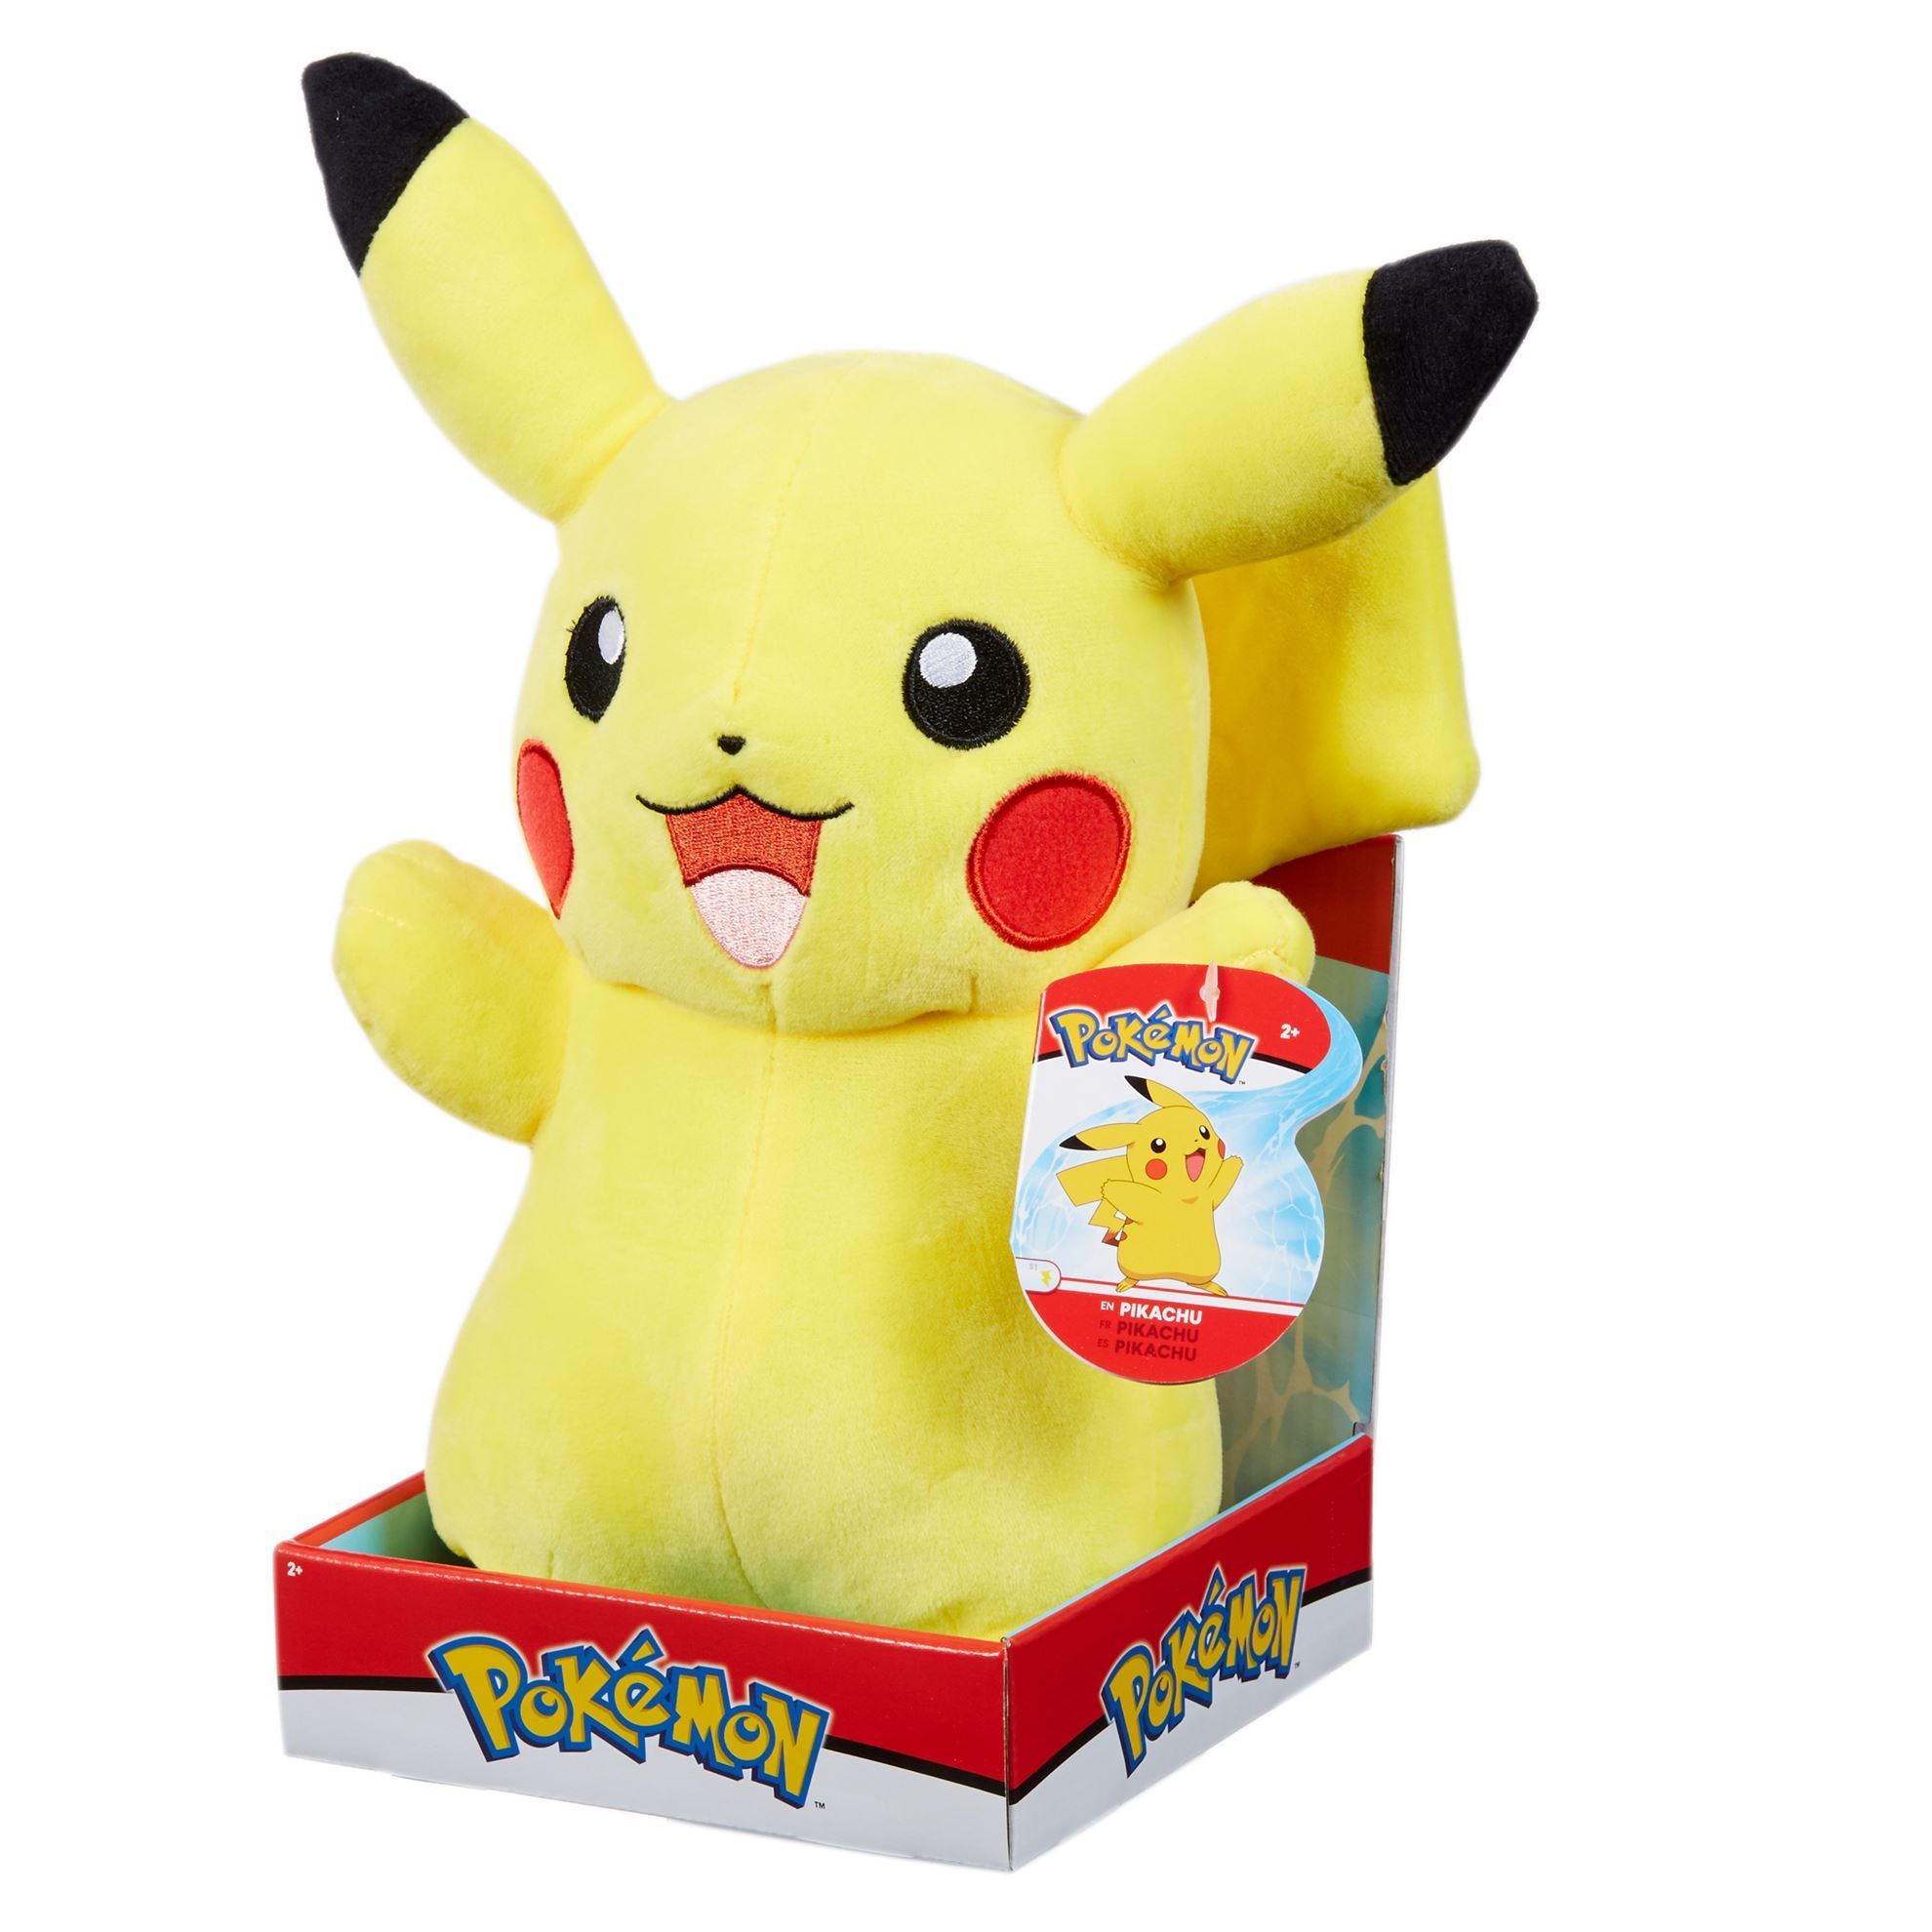 New 12" 30Cm Licensed Pokemon Pikachu Plush Toys Soft Stuffed Animal Doll Gift